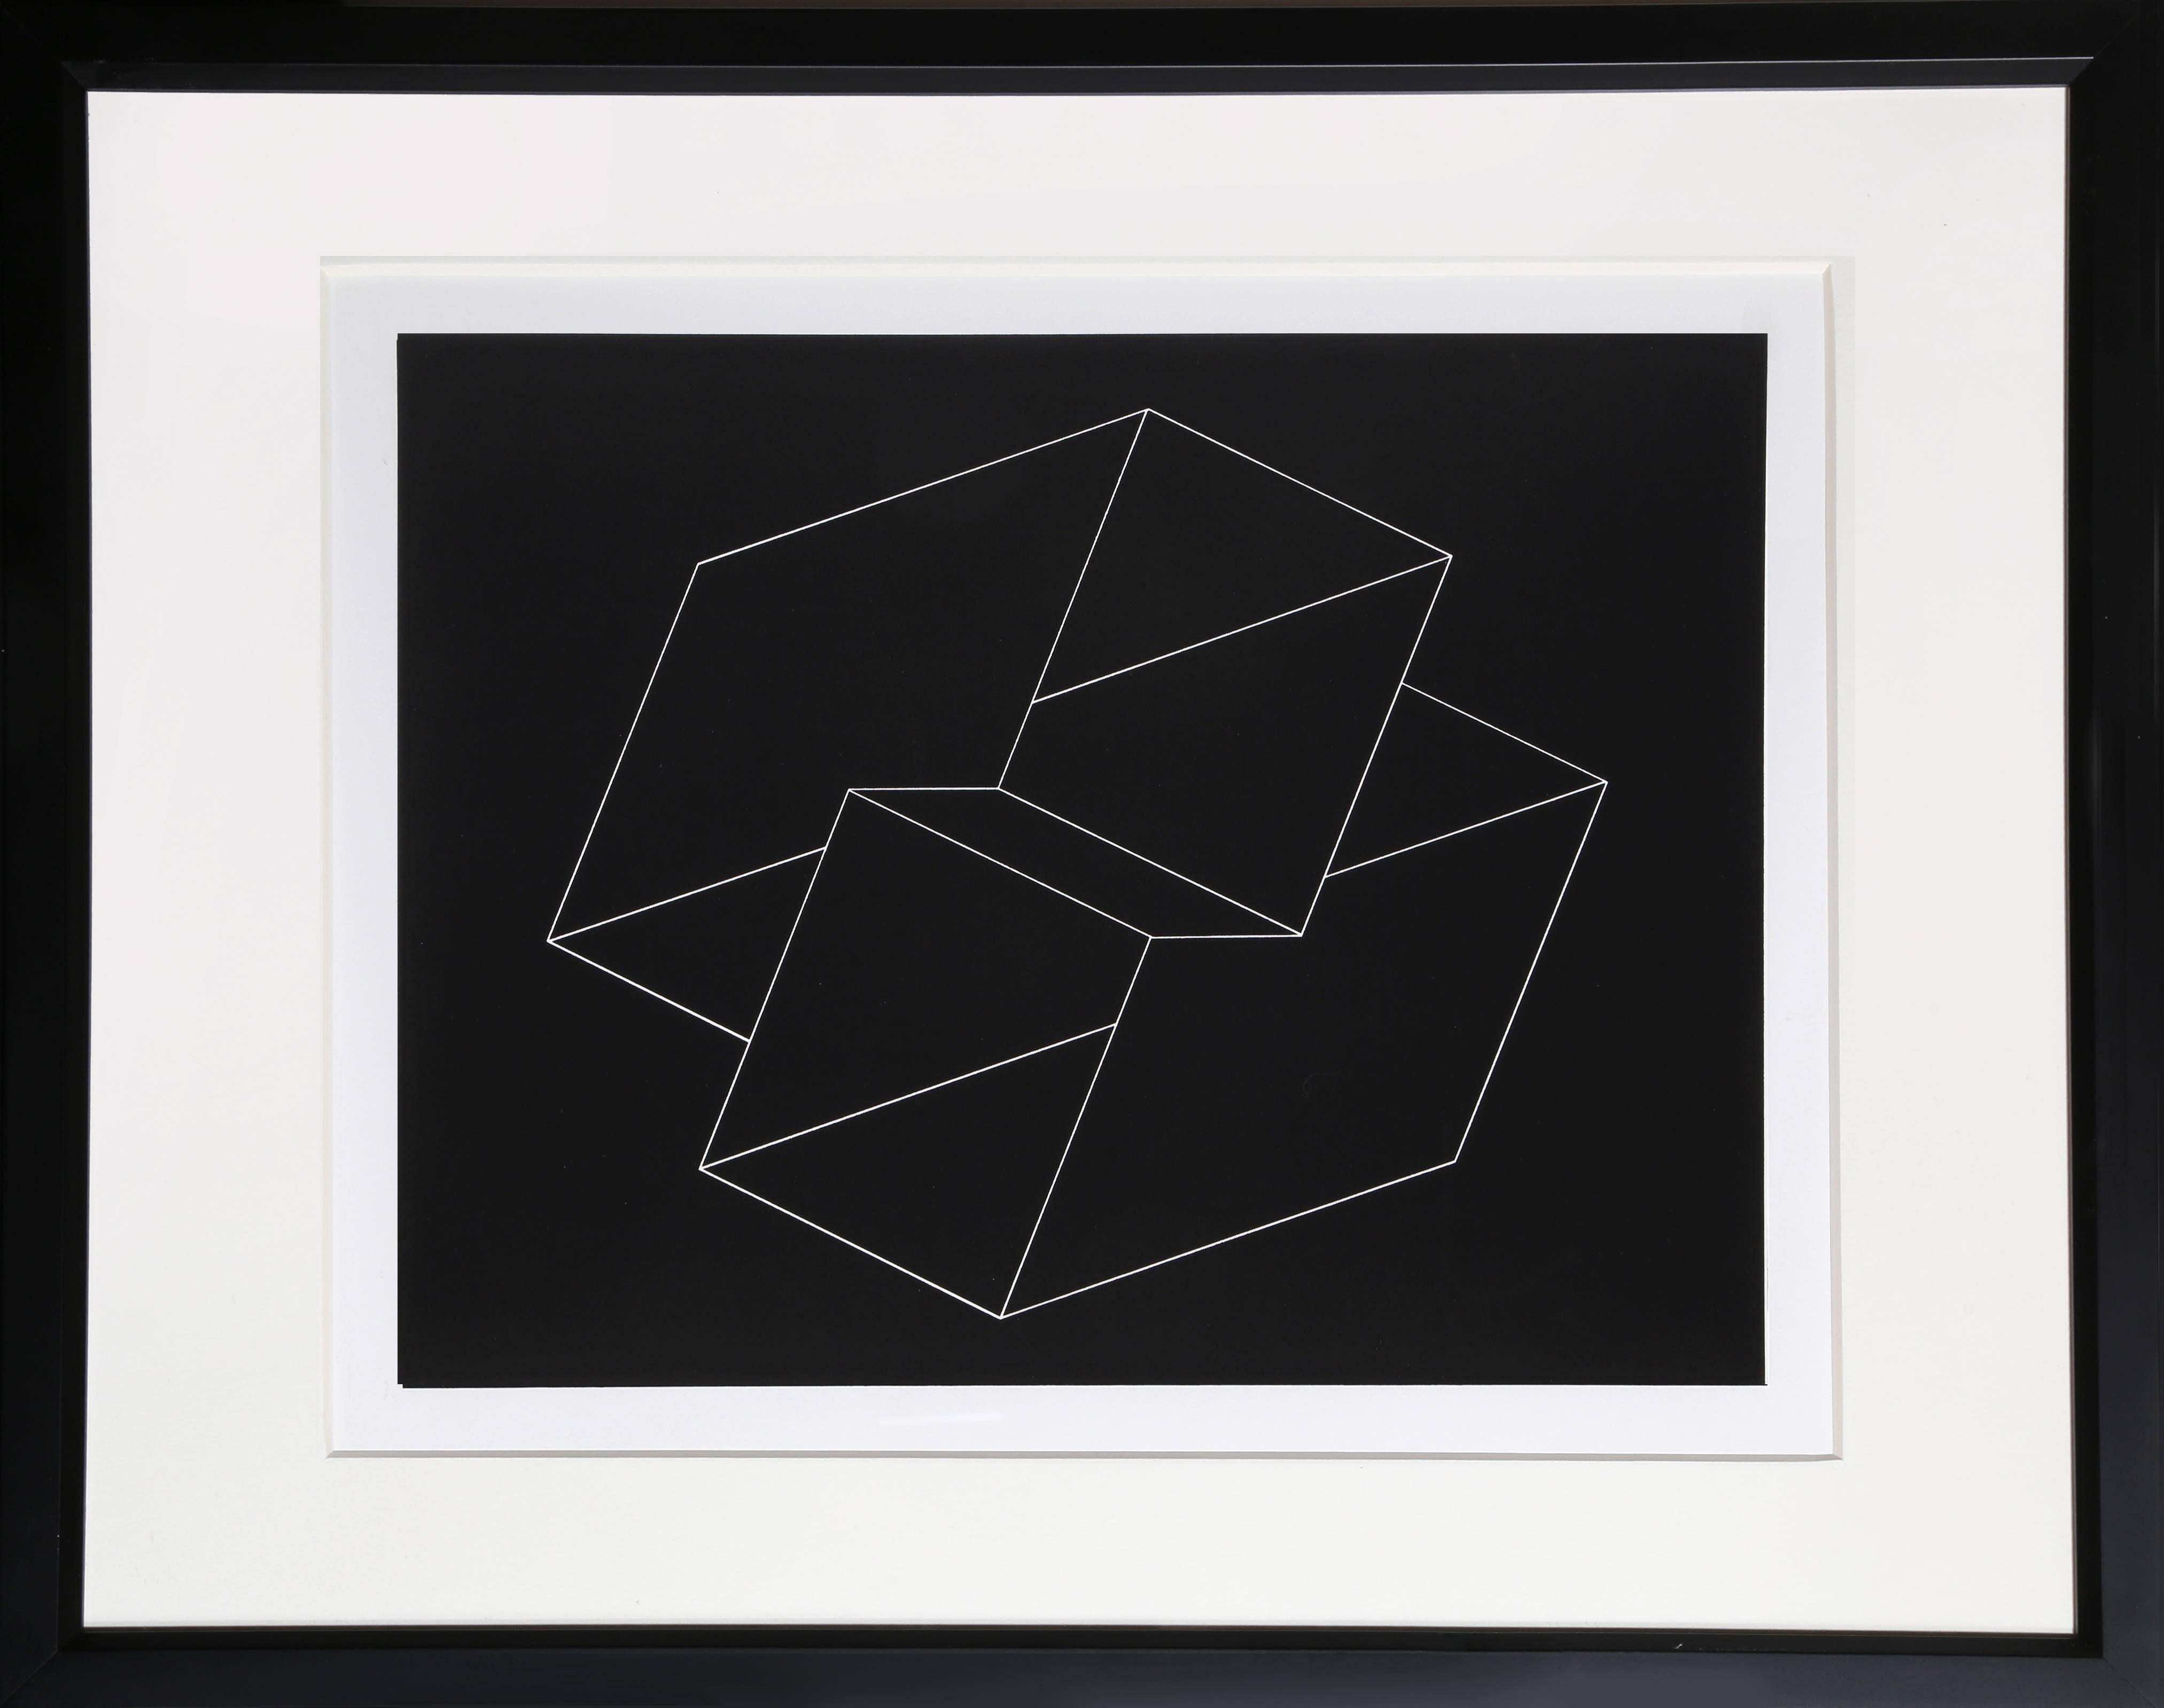 Artist:	Josef Albers
Title:	Portfolio 2, Folder 10, Image 1 from Portfolio: Formulation: Articulation 
Year:	1972
Medium:	Silkscreen
Edition:	1000
Paper Size:	15 x 20 inches (38.1 x 50.8 cm)
Frame: 19.5 x 24 inches

Formulation: Articulation